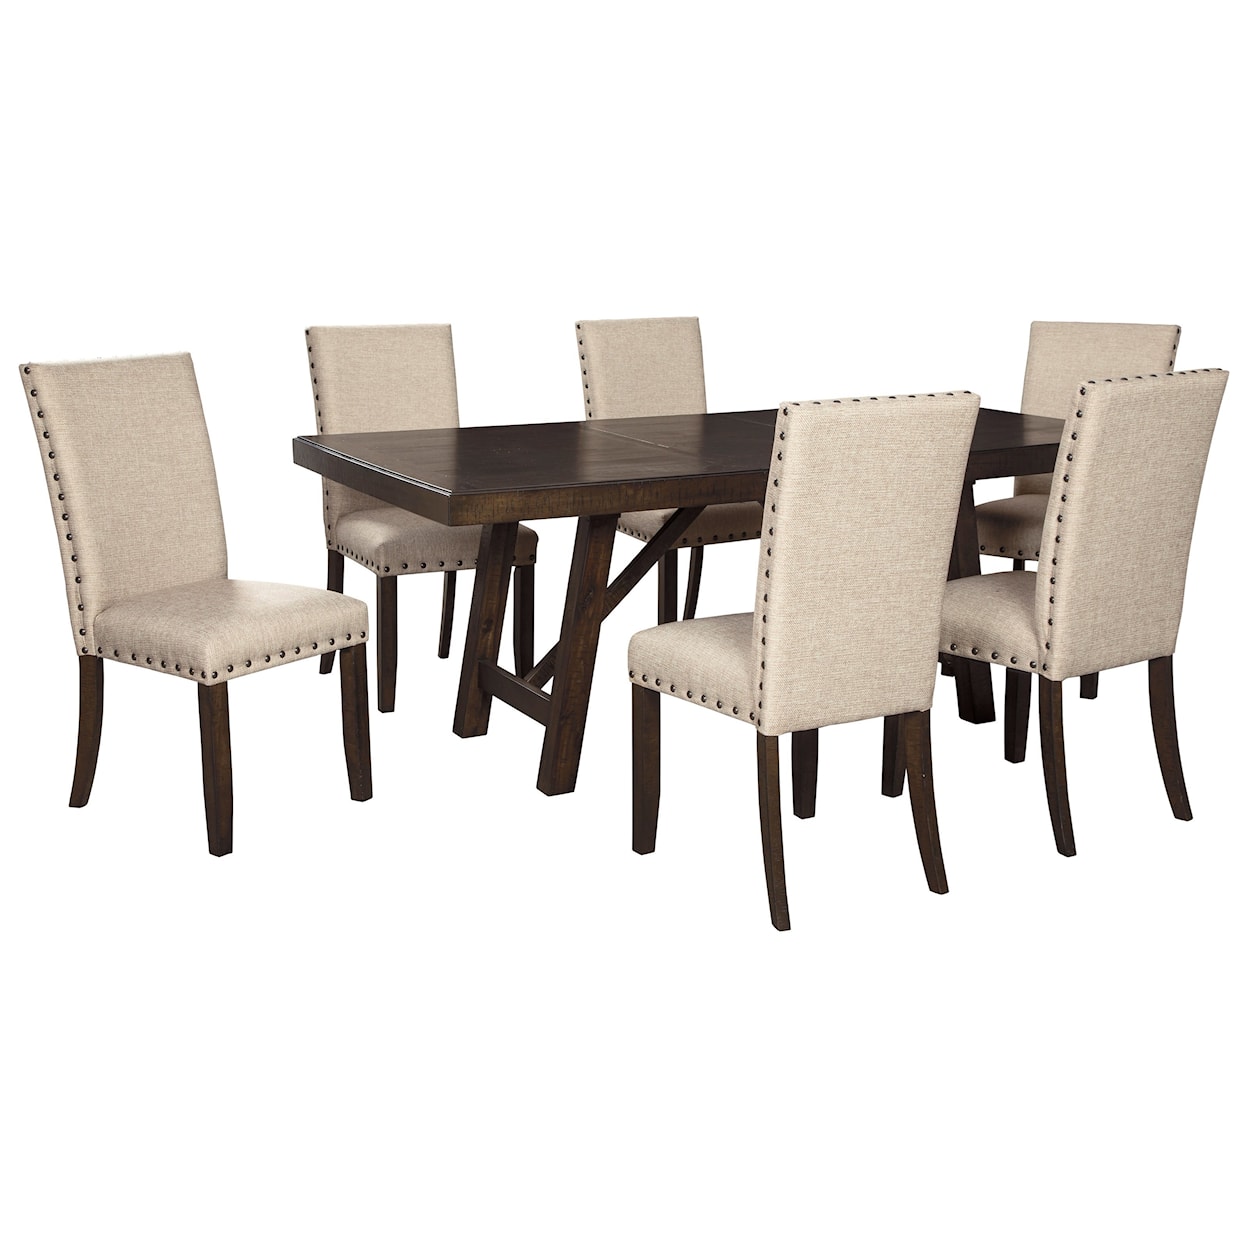 Ashley Furniture Signature Design Rokane Dining Table Set for Six